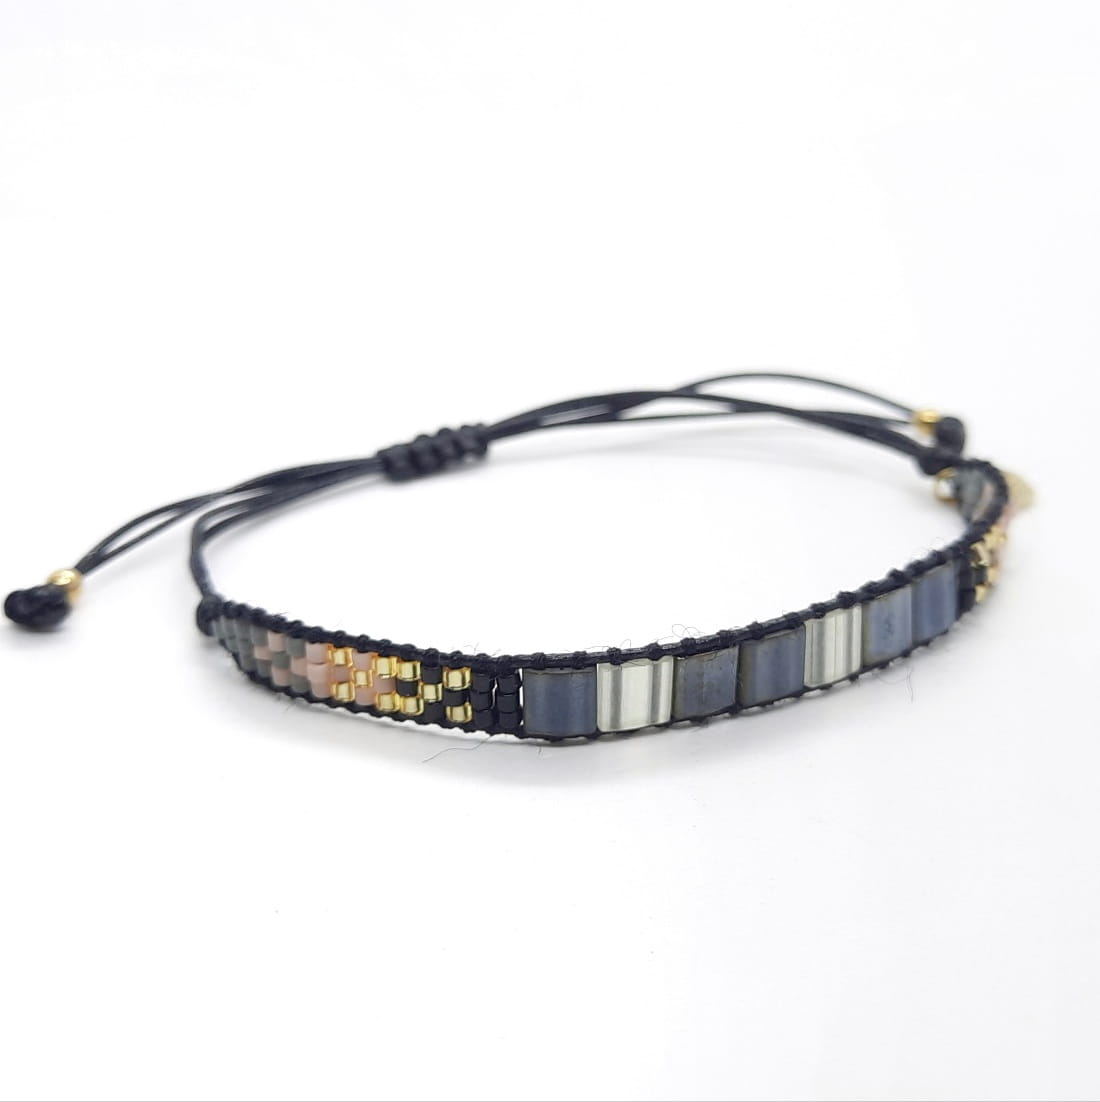 Strand-Armband mit bunten Perlen - TILA Armband KOOMPLIMENTS bis 20 cm Lila / Grau 